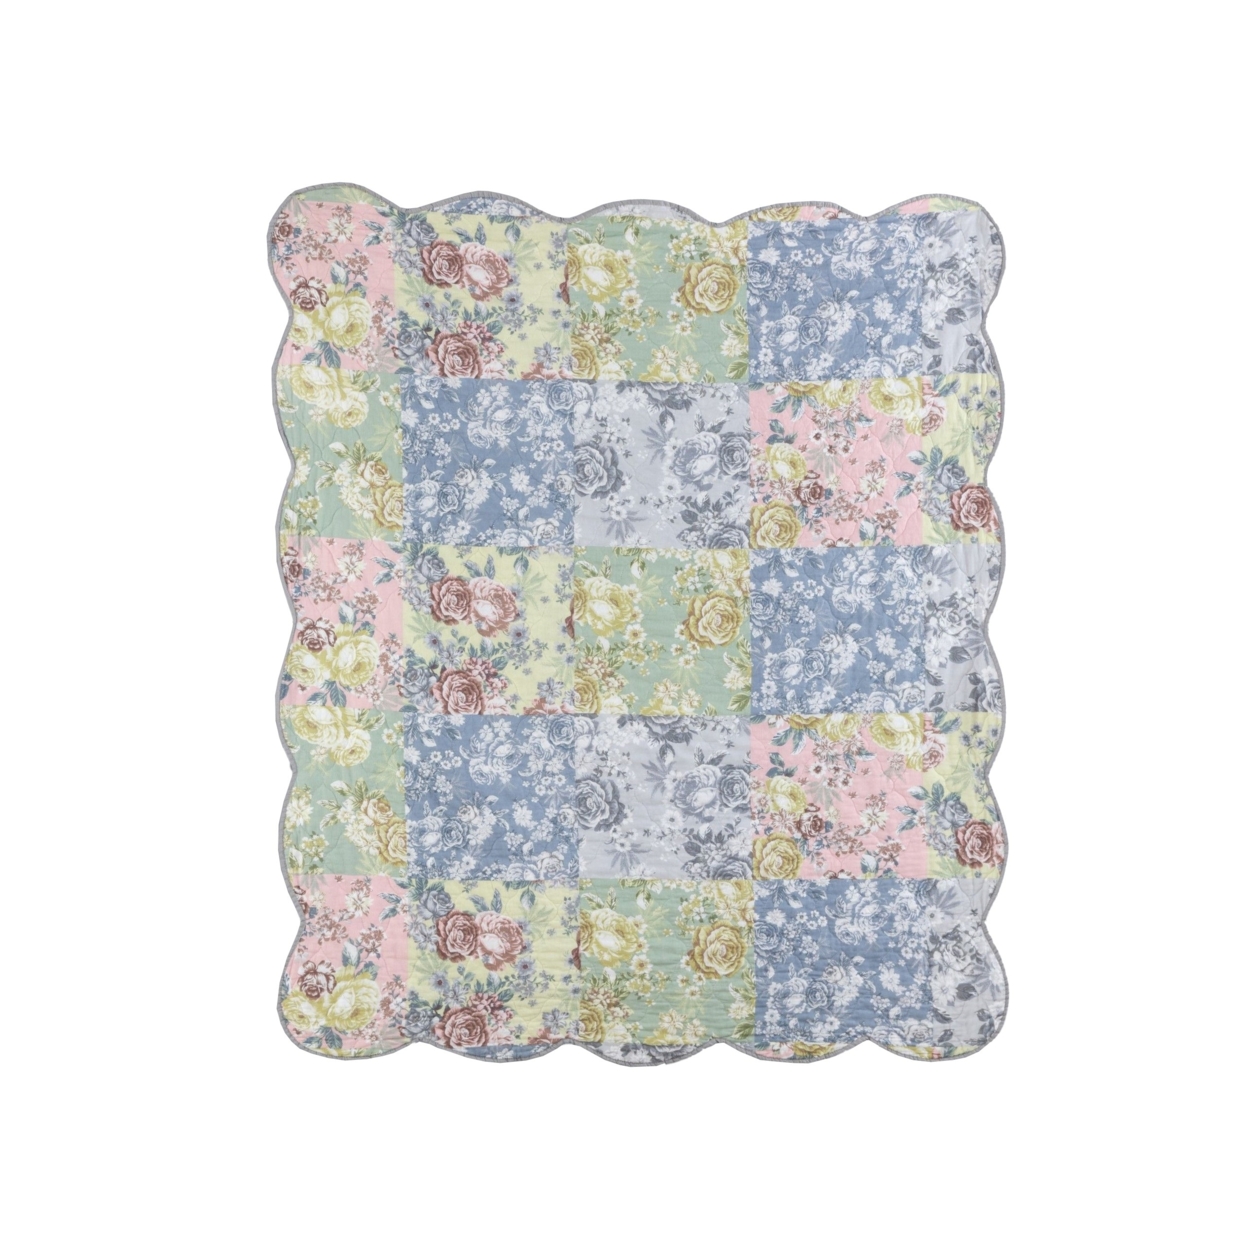 Eni 60 Inch Cotton Throw Blanket, Pastel Blue Flowers, Scalloped Edges- Saltoro Sherpi